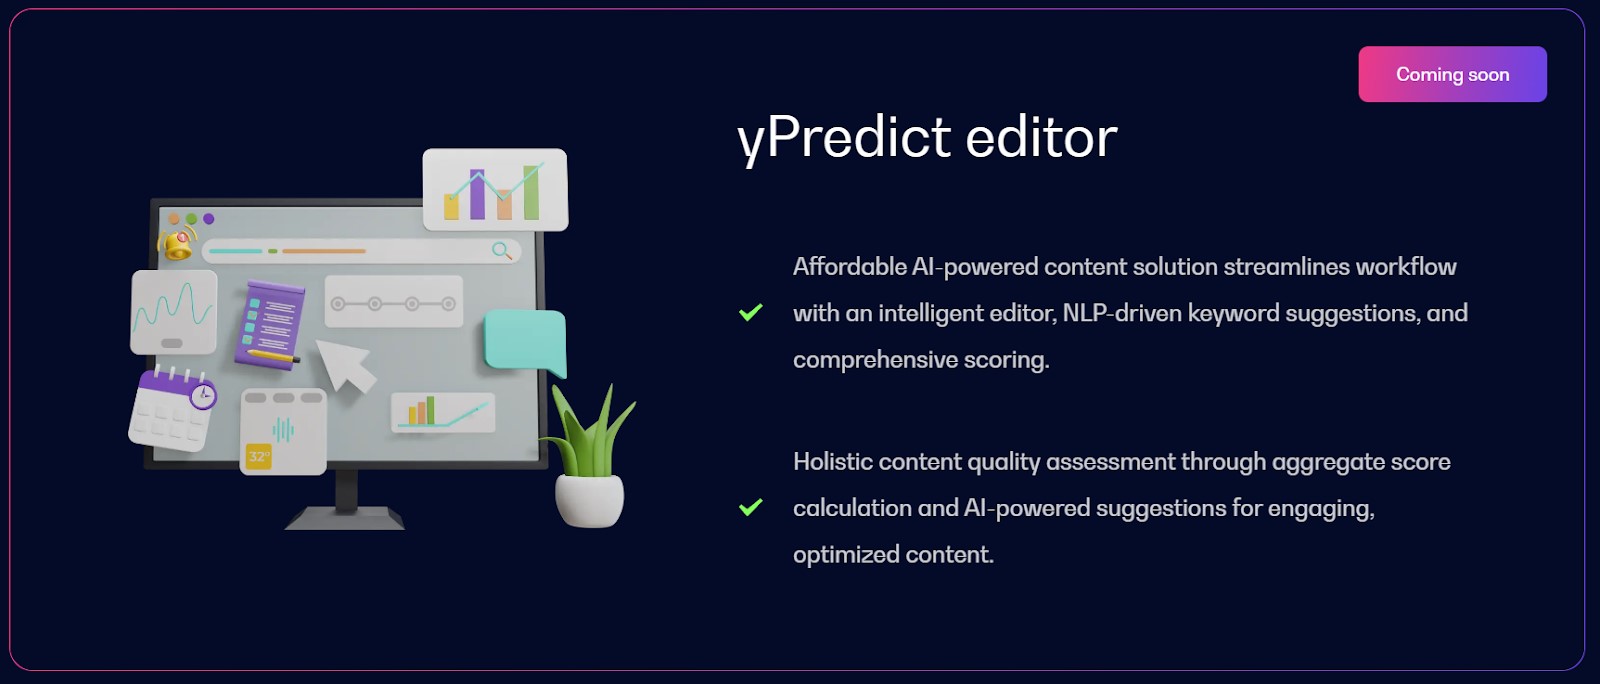 yPredict editor